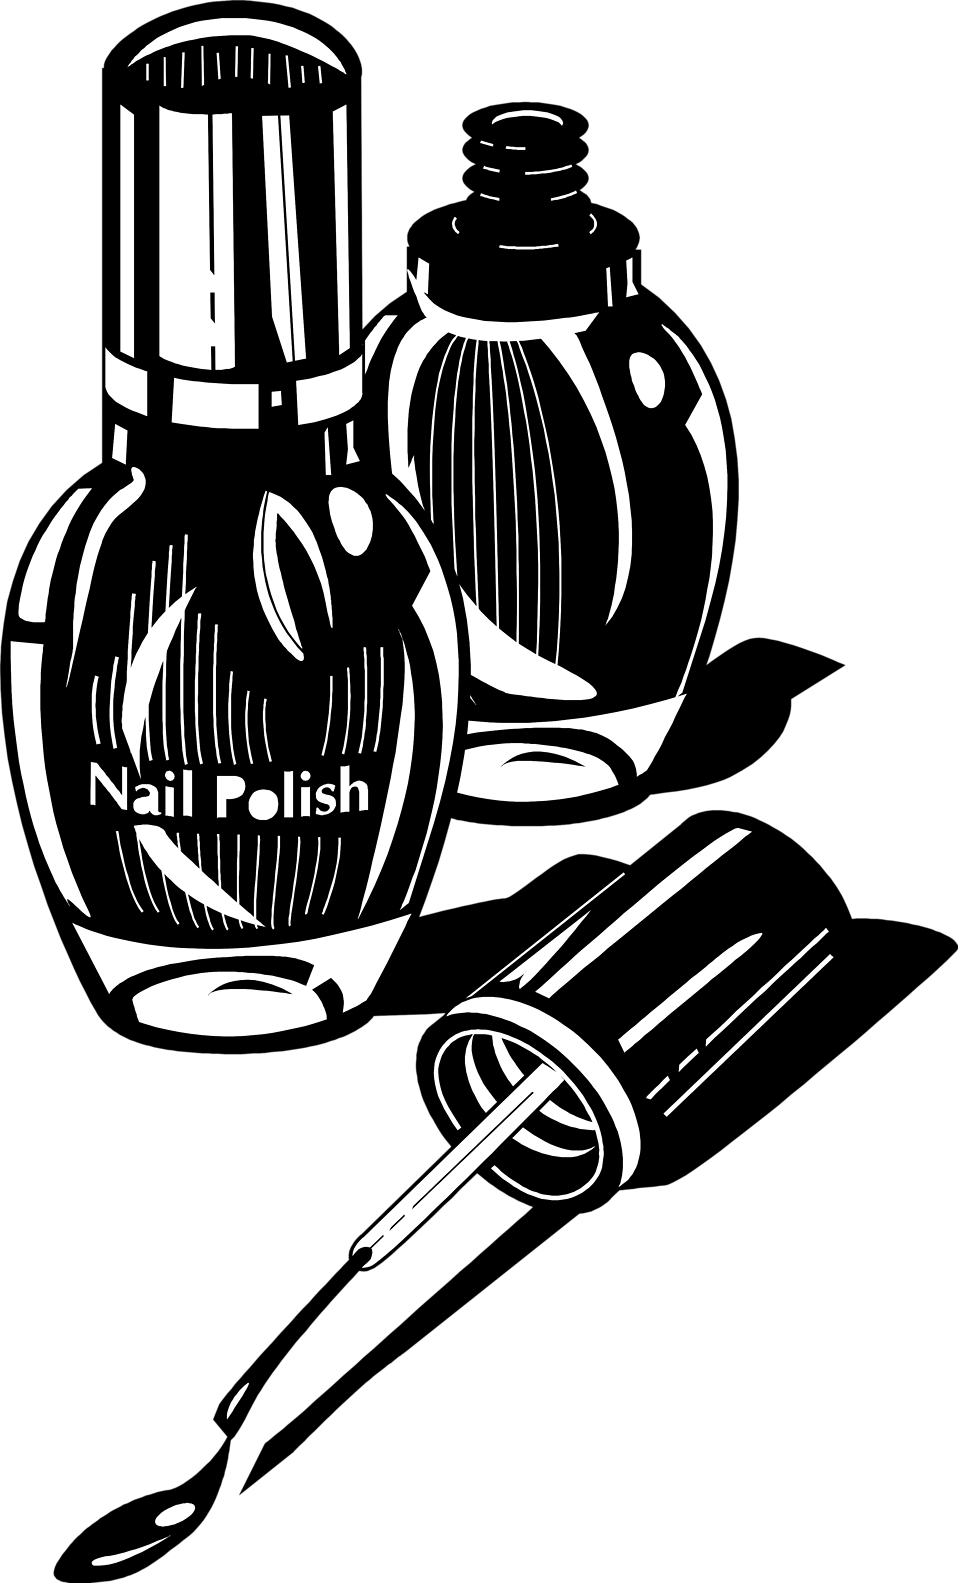 Nail Polish   Free Stock Photo   Illustration Of Nail Polish Bottles